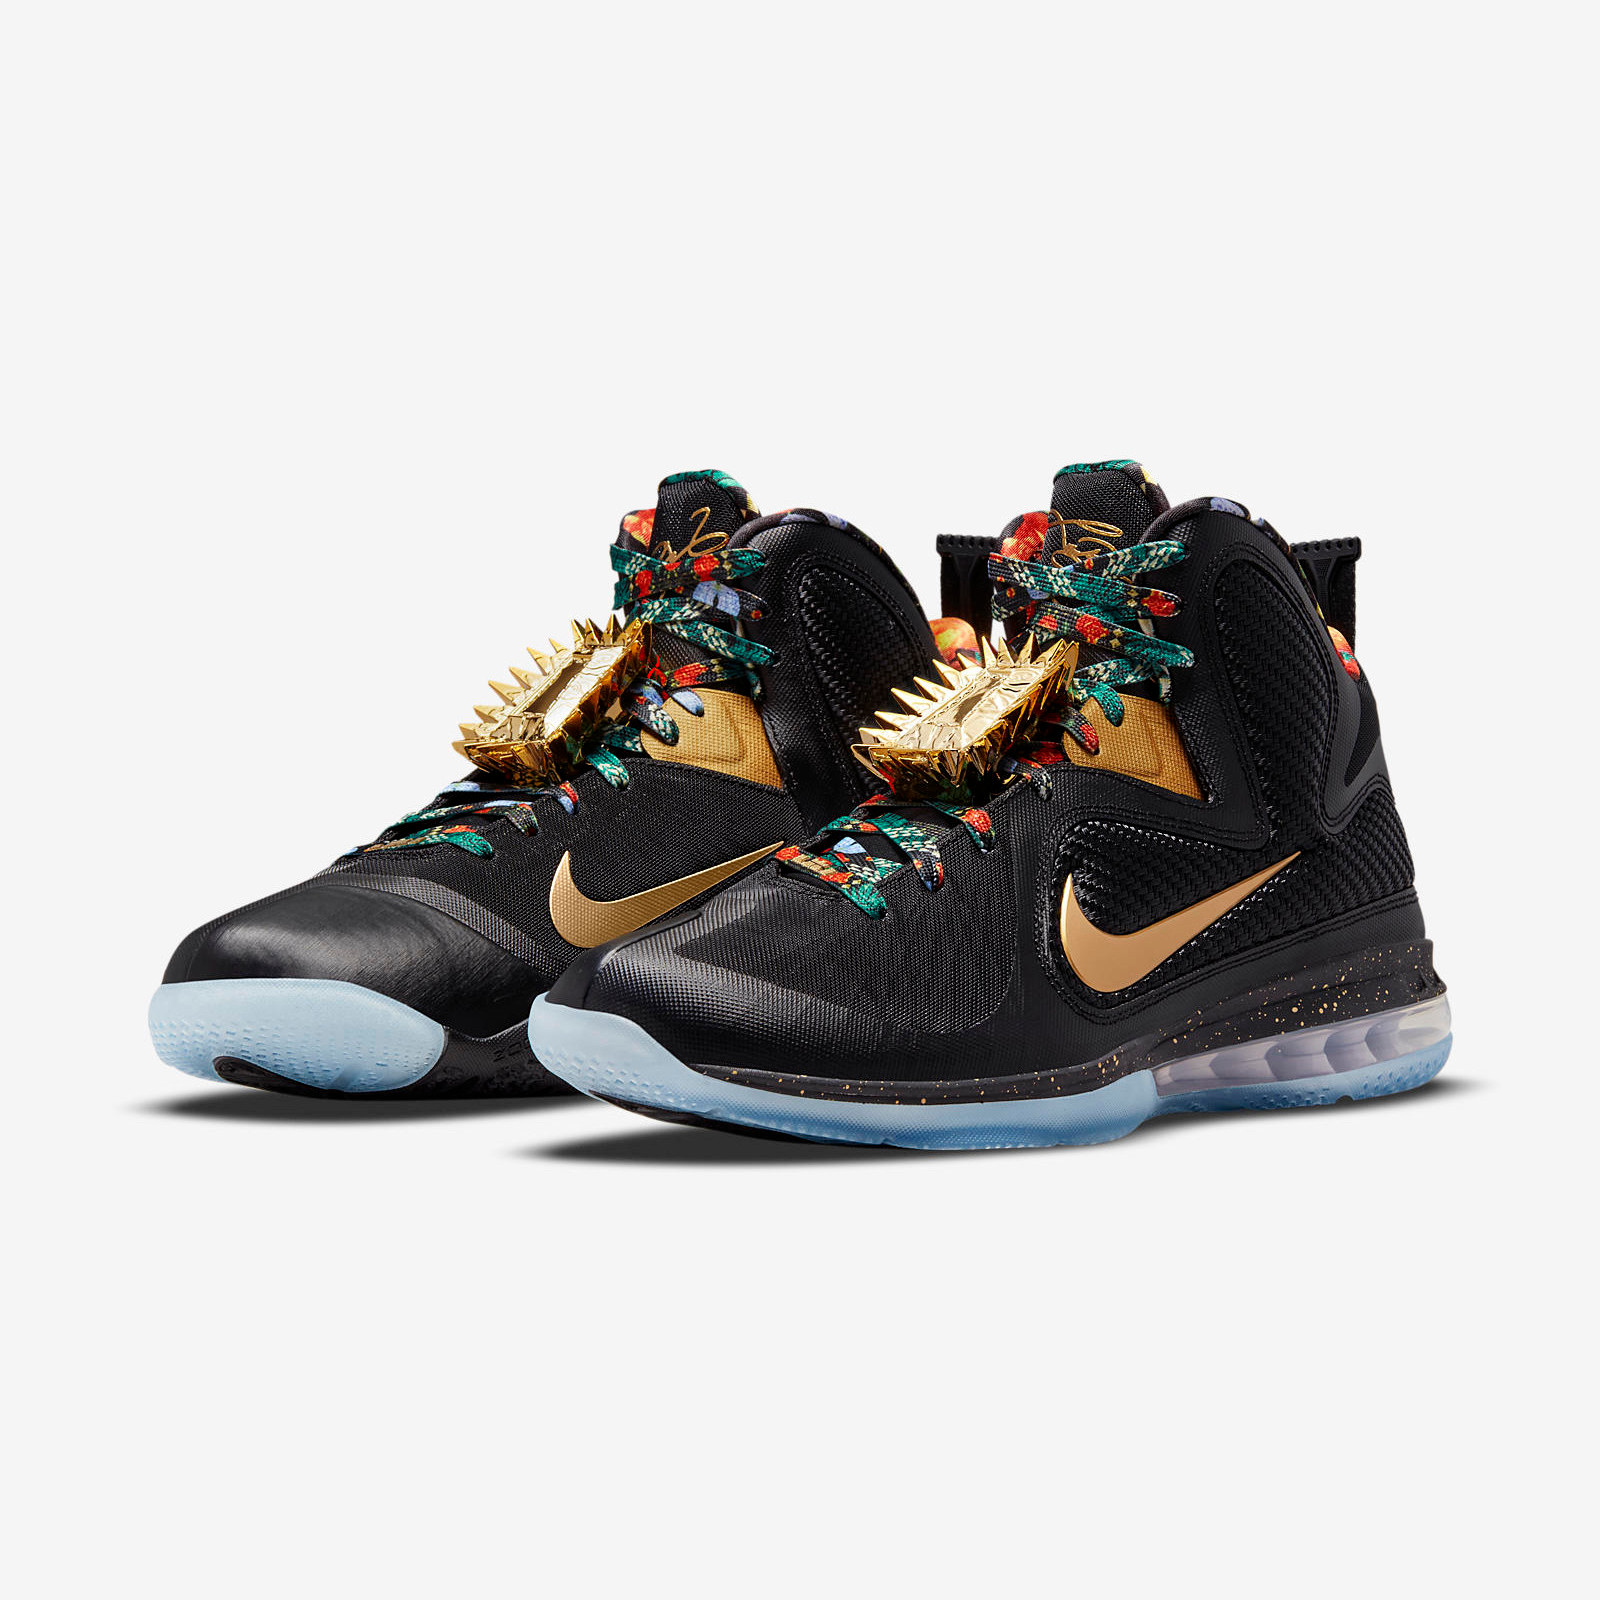 Nike LeBron 9
« Watch The Throne »